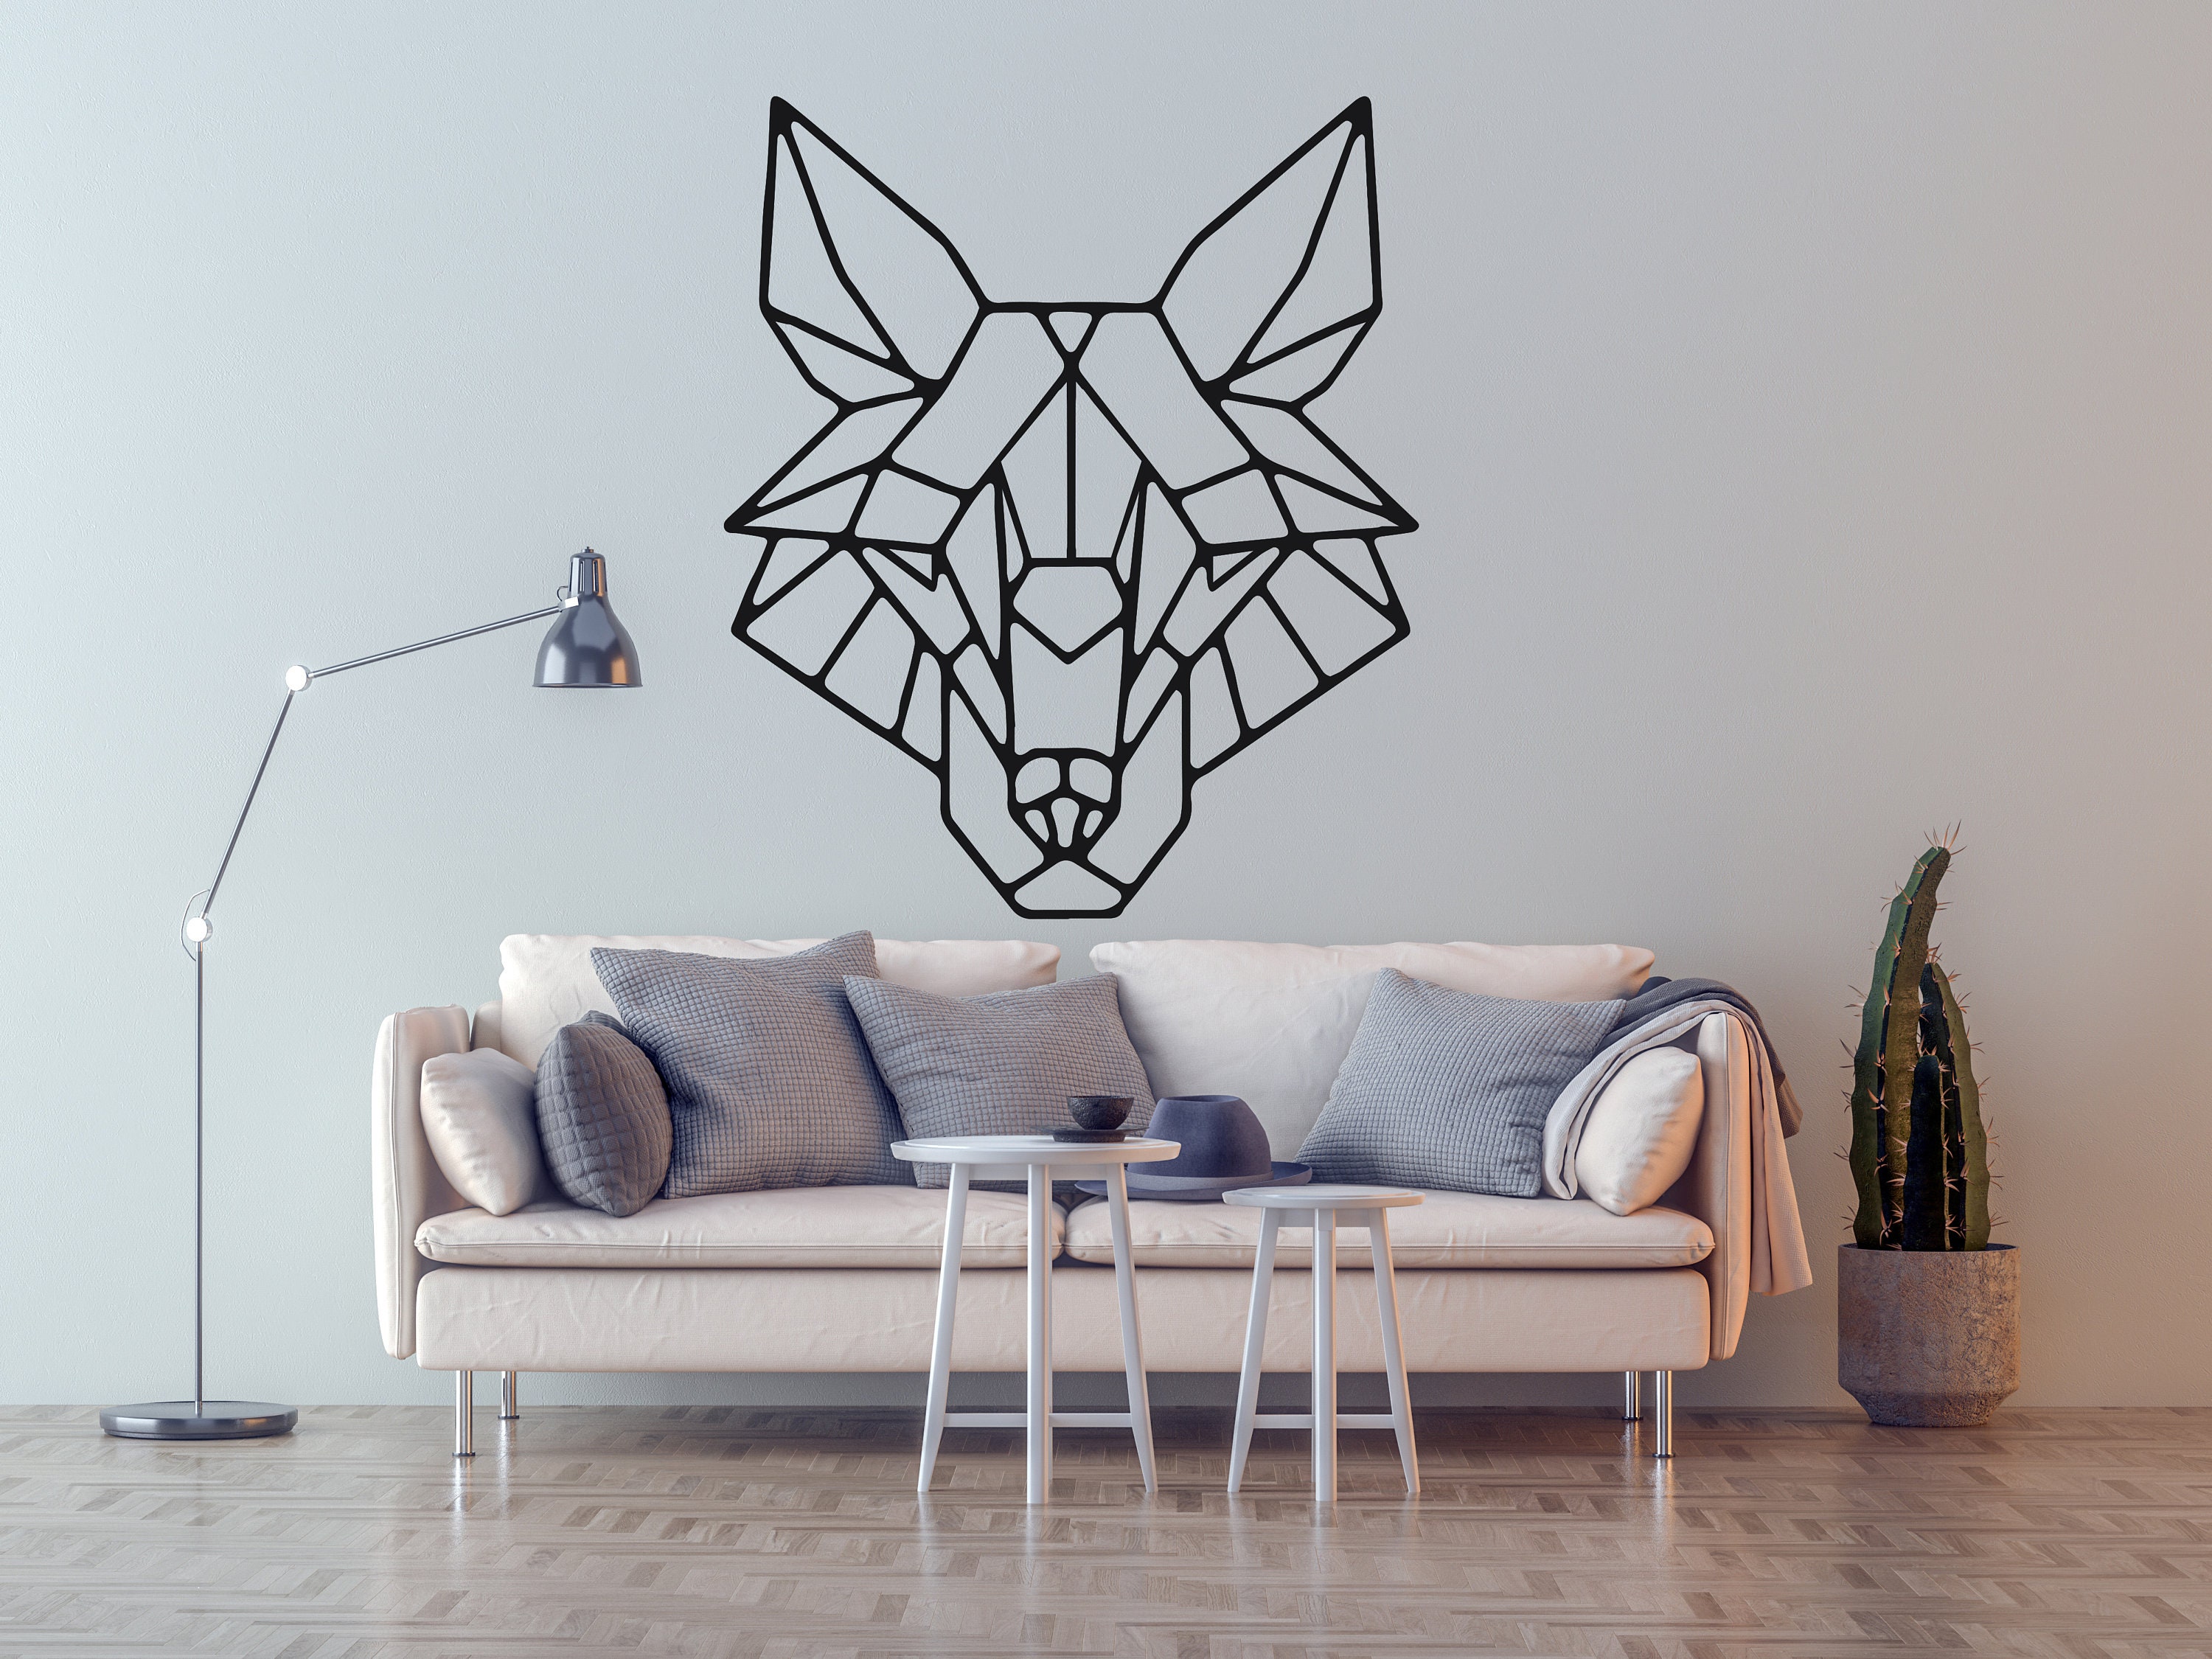 Geometric Wolf Art Vinyl Wall Sticker Decals Bedroom Decor Decoration Wall Decal